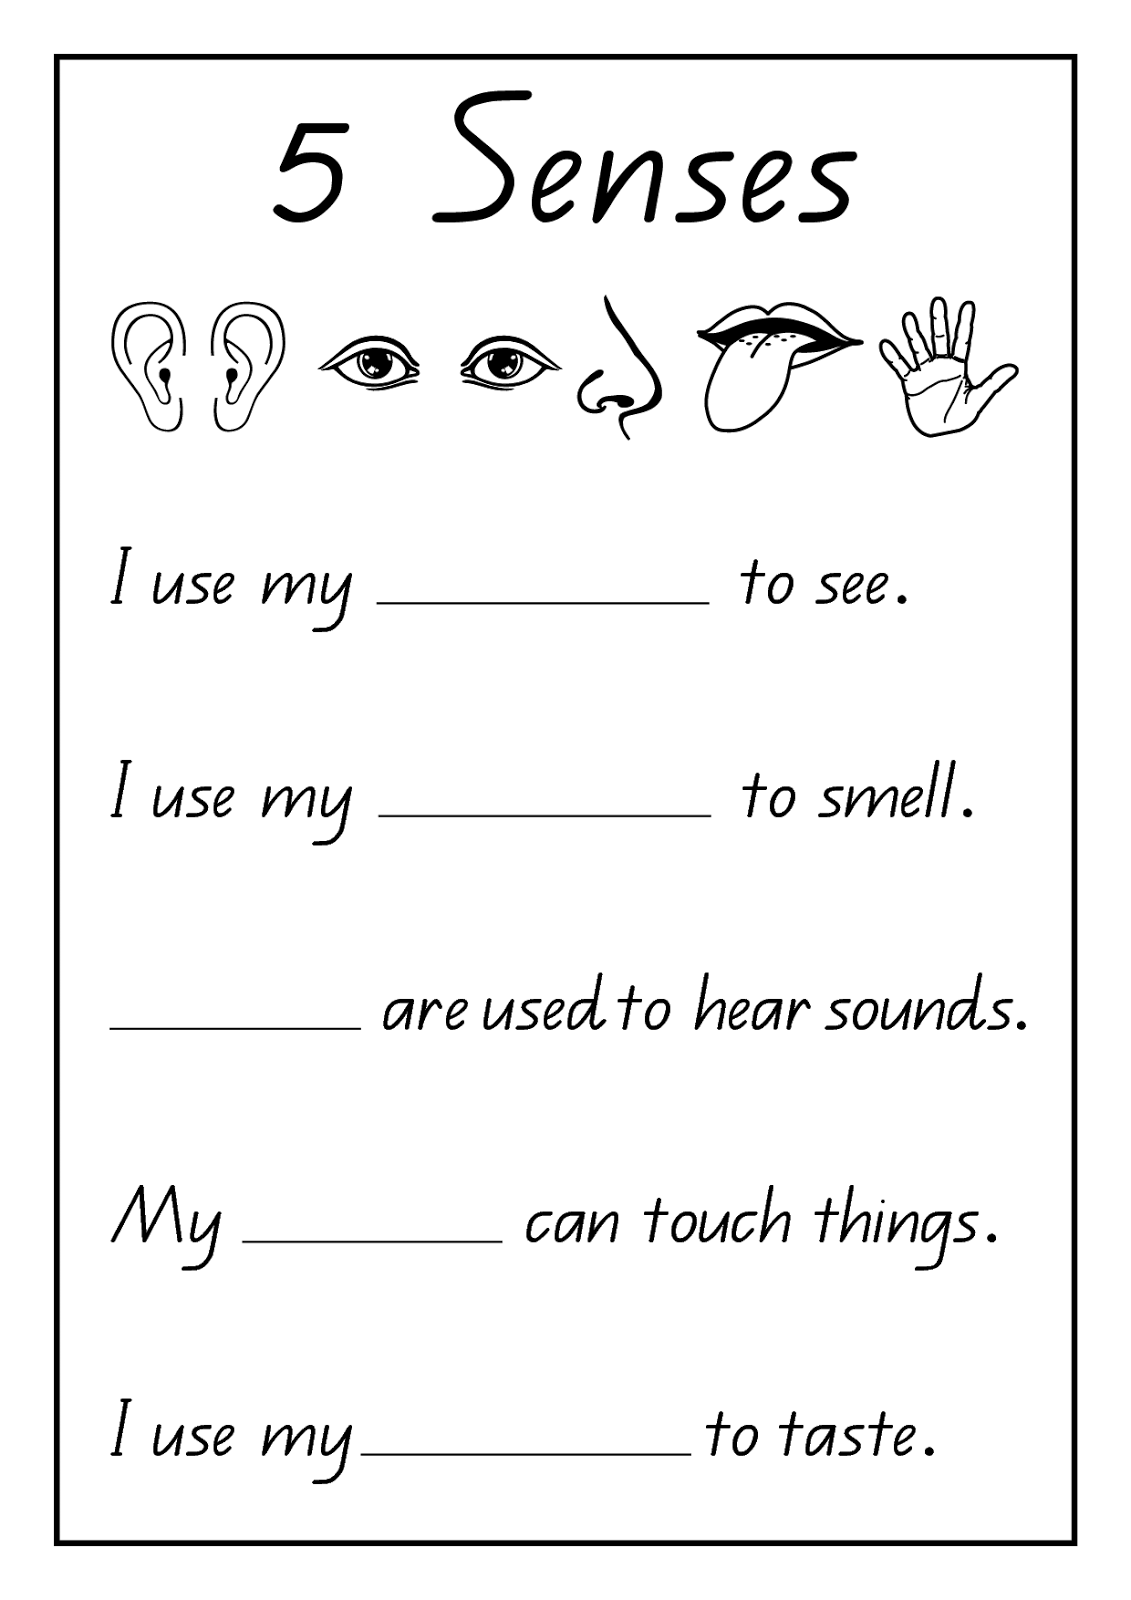 Five Senses Worksheet for Grade 1 Image